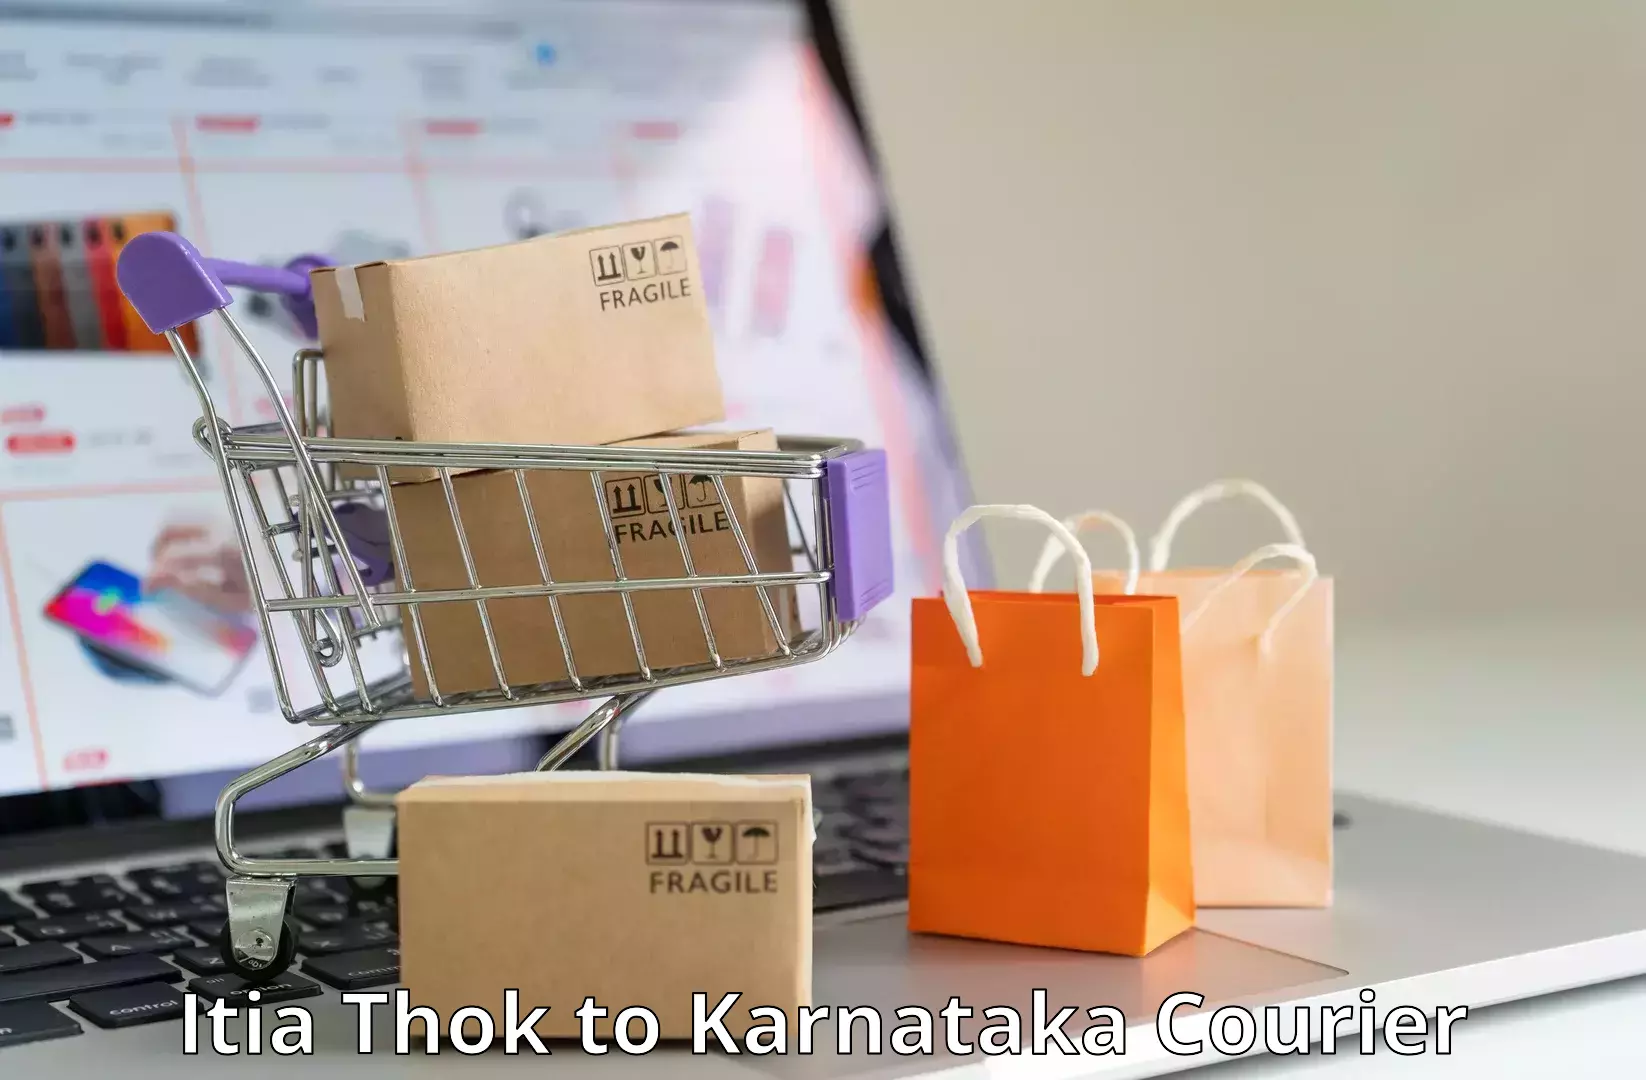 Advanced tracking systems Itia Thok to Karnataka